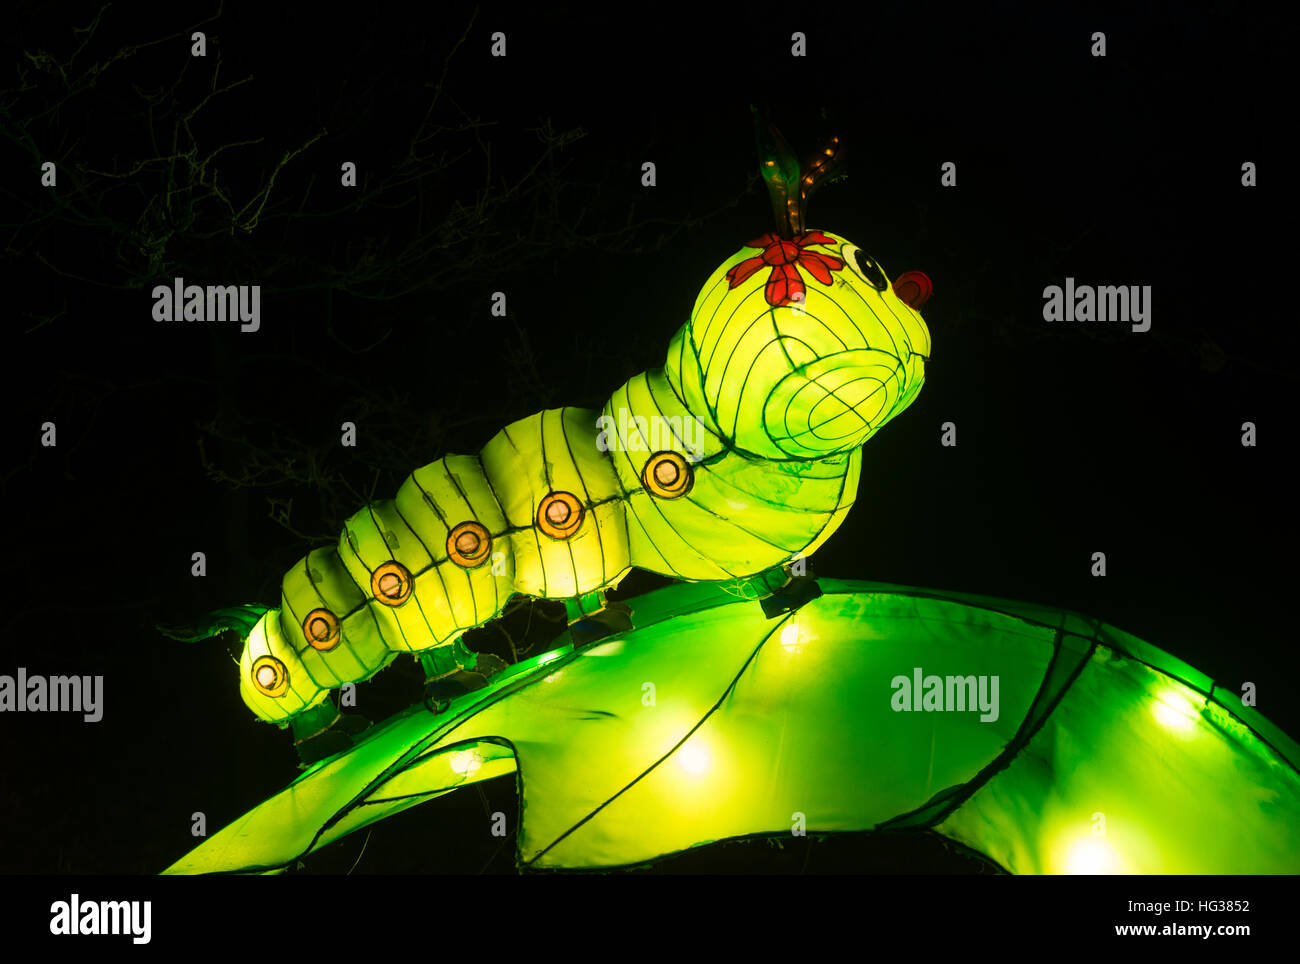 BEEKSE BERGEN, Holanda - 29 de diciembre de 2016:light festival africano con Caterpillar en lleno de luces en Beekse bergen el 29 de diciembre de este festi Foto de stock